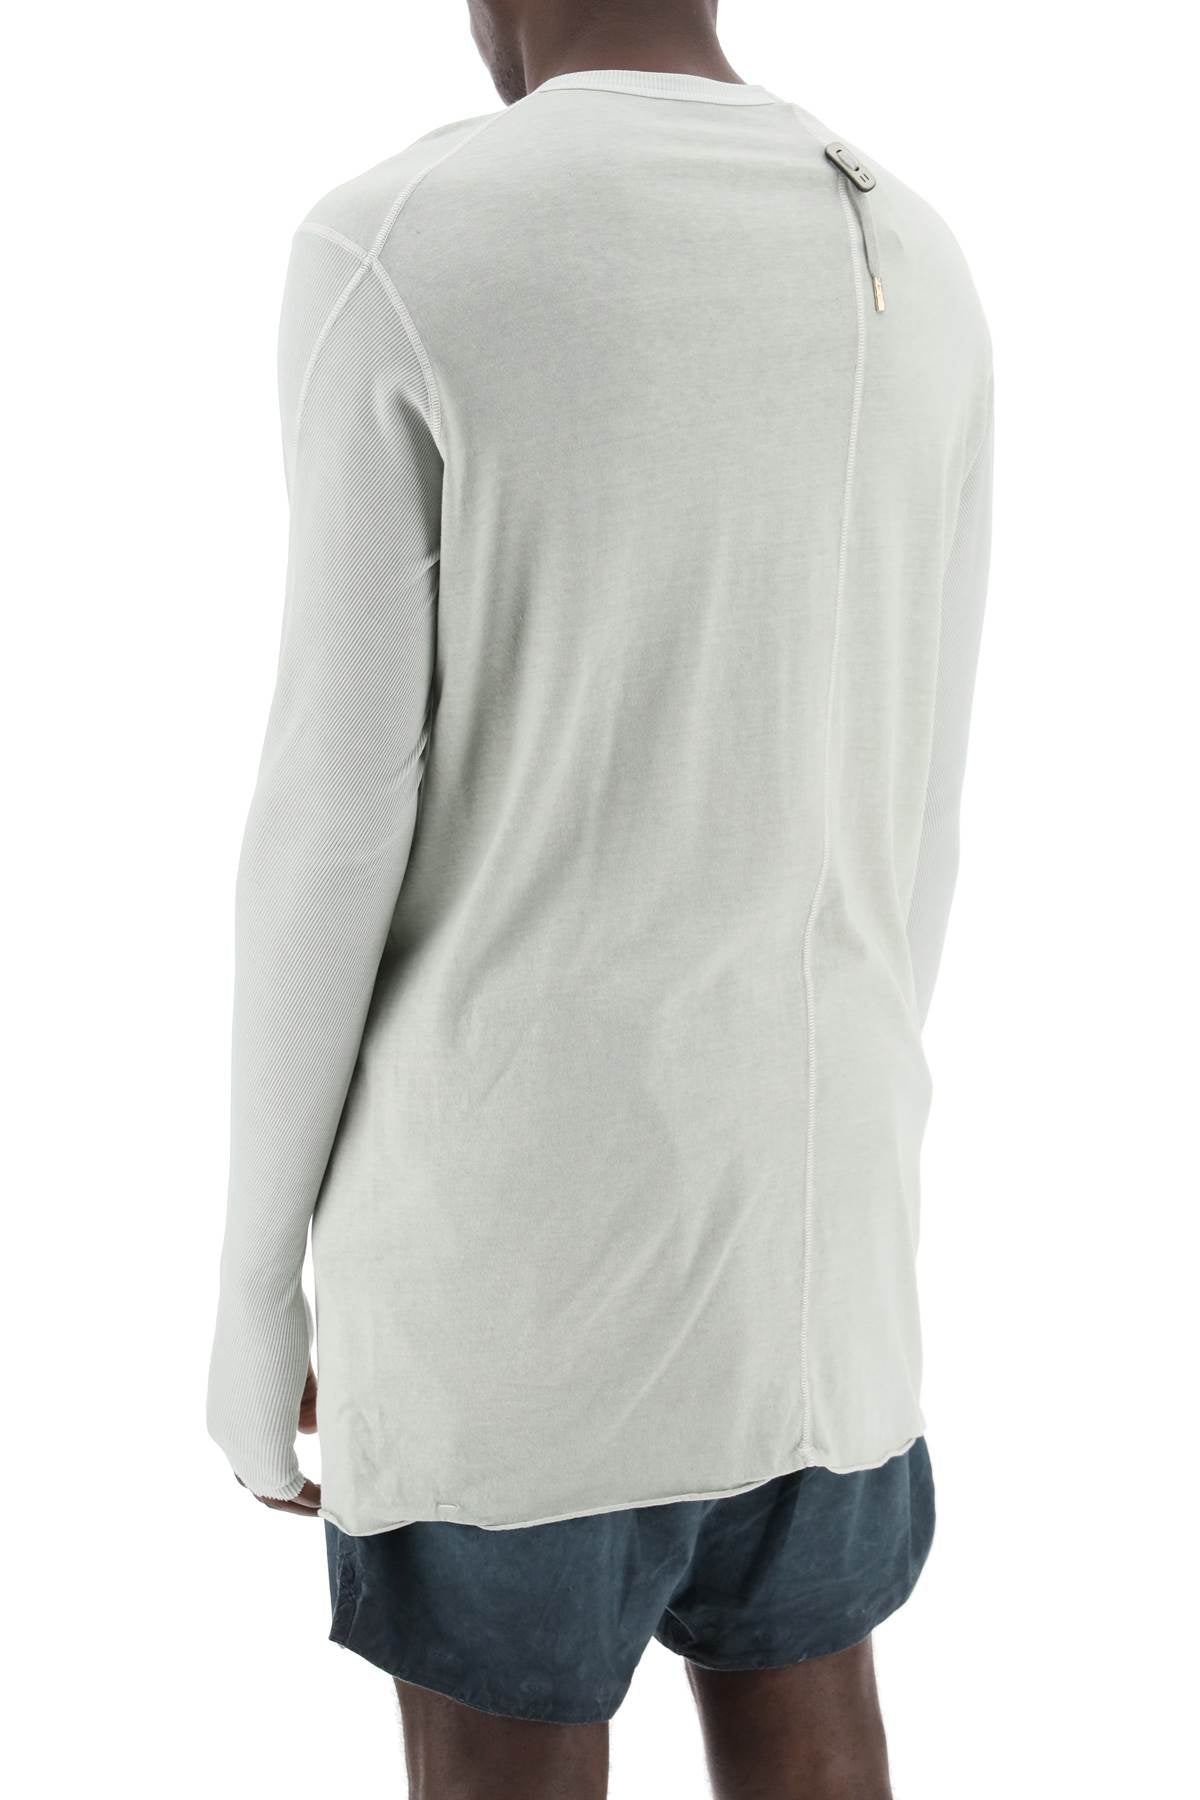 Boris bidjan saberi long-sleeved cotton t-shirt-2